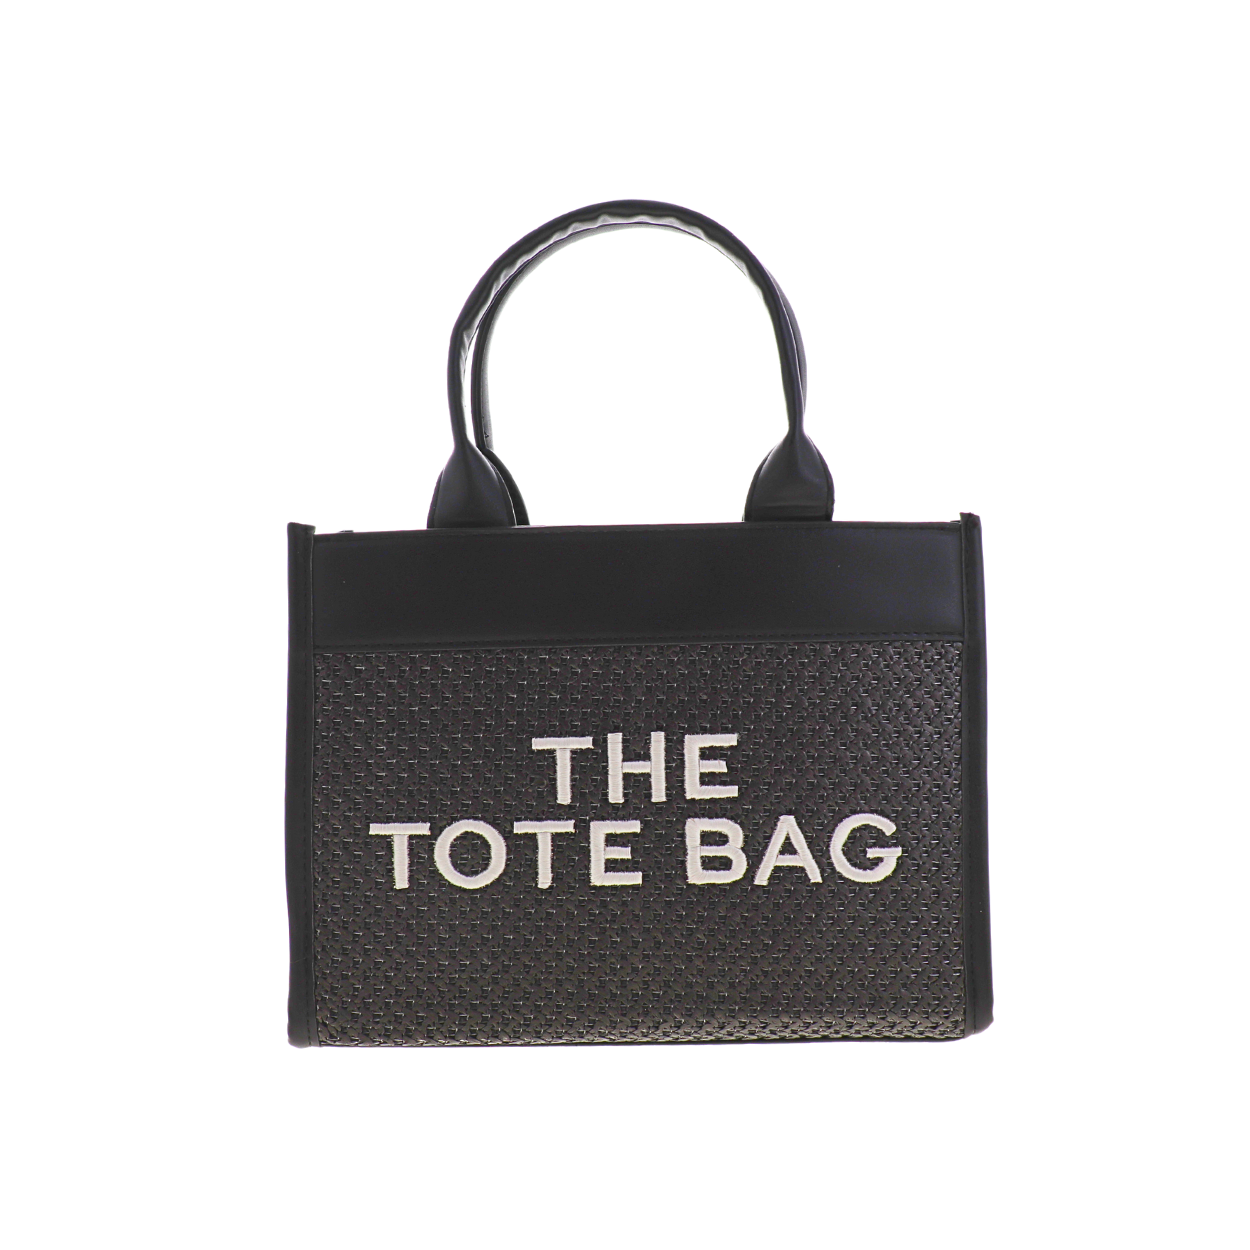 THE TOTE BAG - 5842